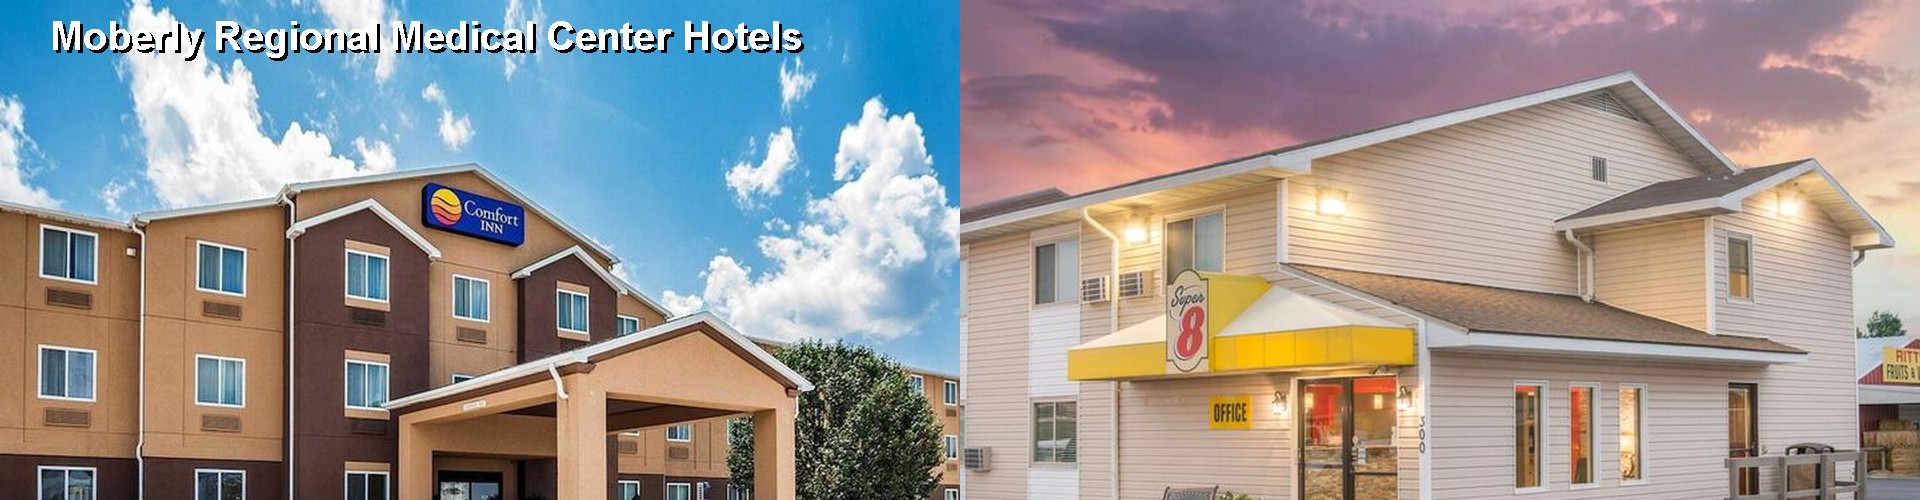 4 Best Hotels near Moberly Regional Medical Center